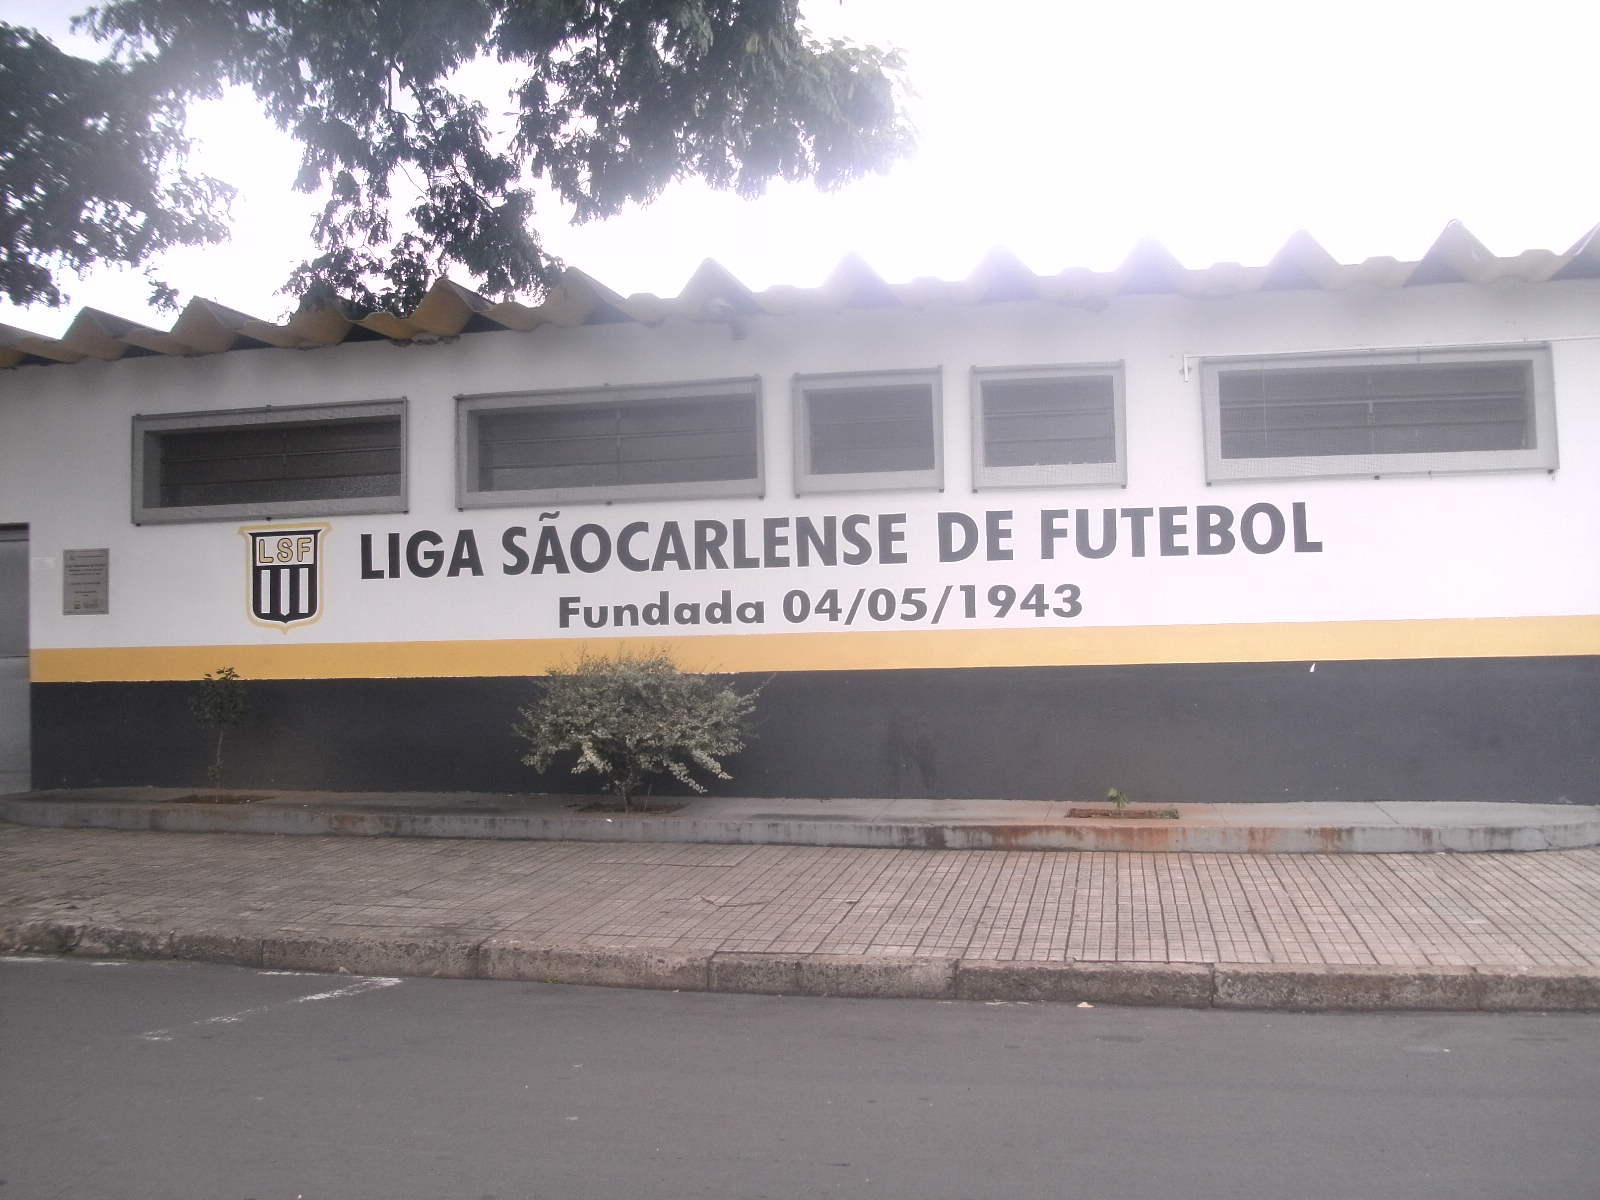 Pratense Club  São Carlos SC